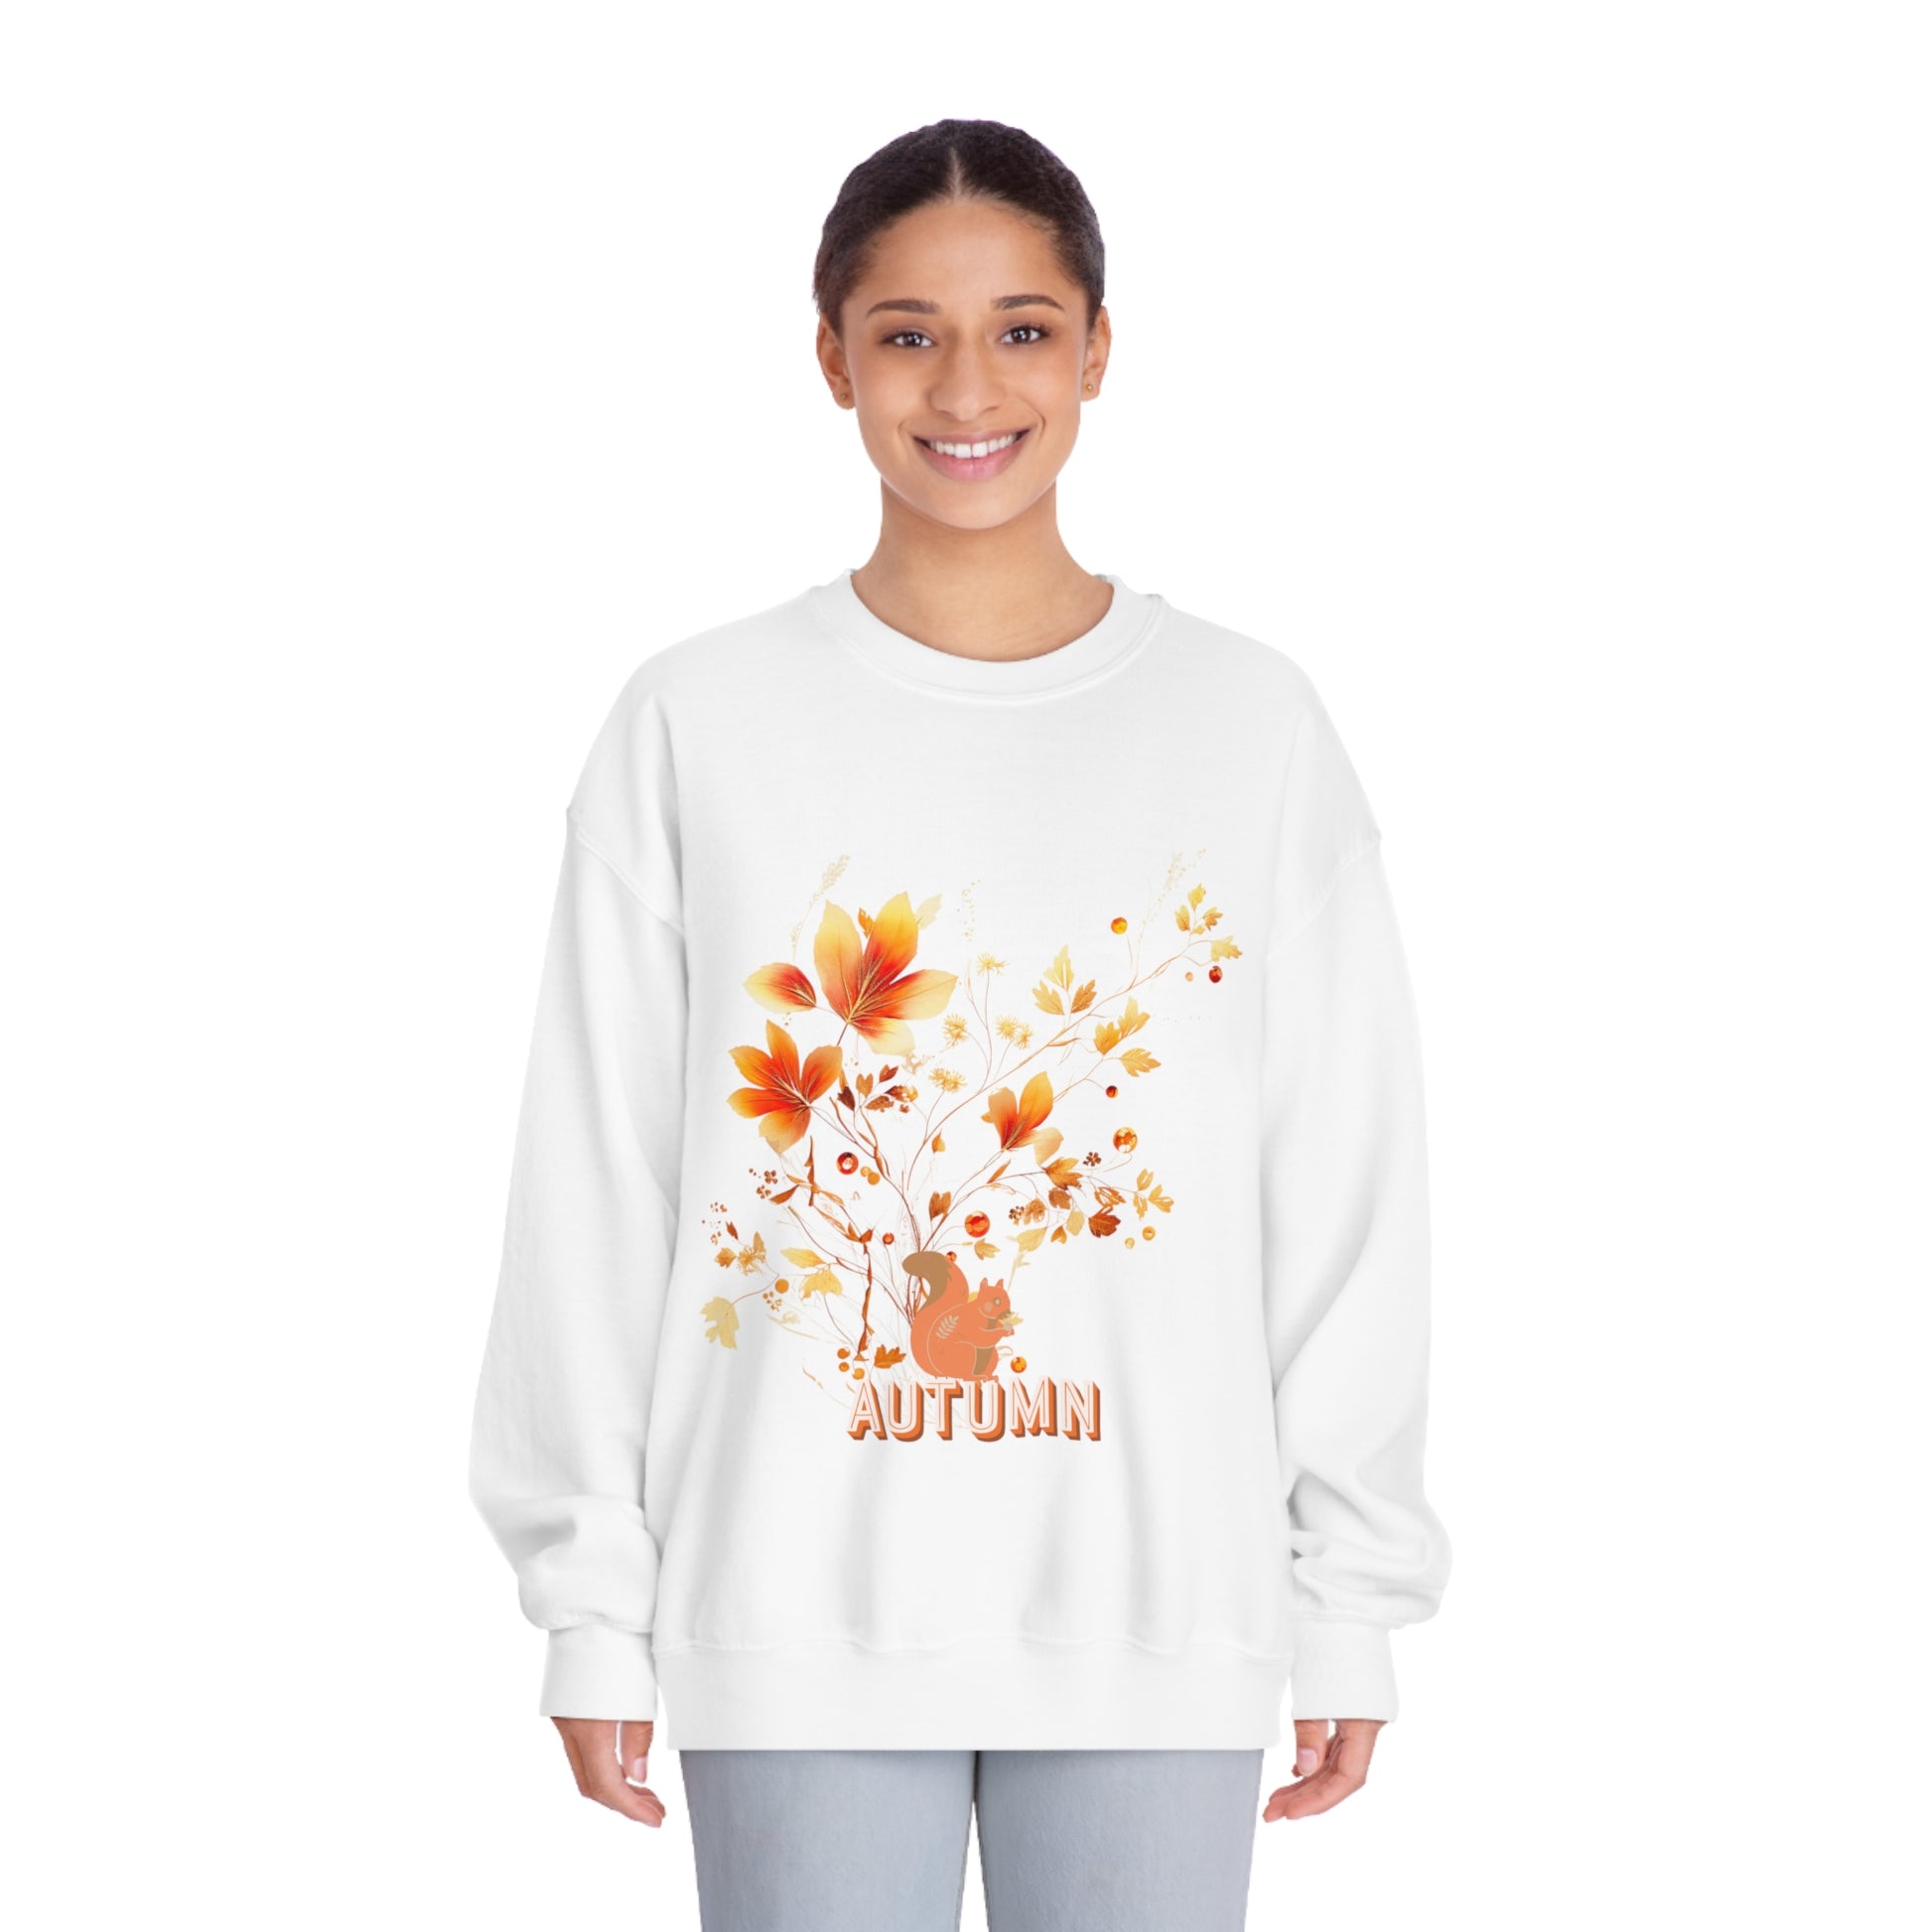 Autumn Leaves Delight Sweatshirt For Autumn Lovers Sweatshirt White S 